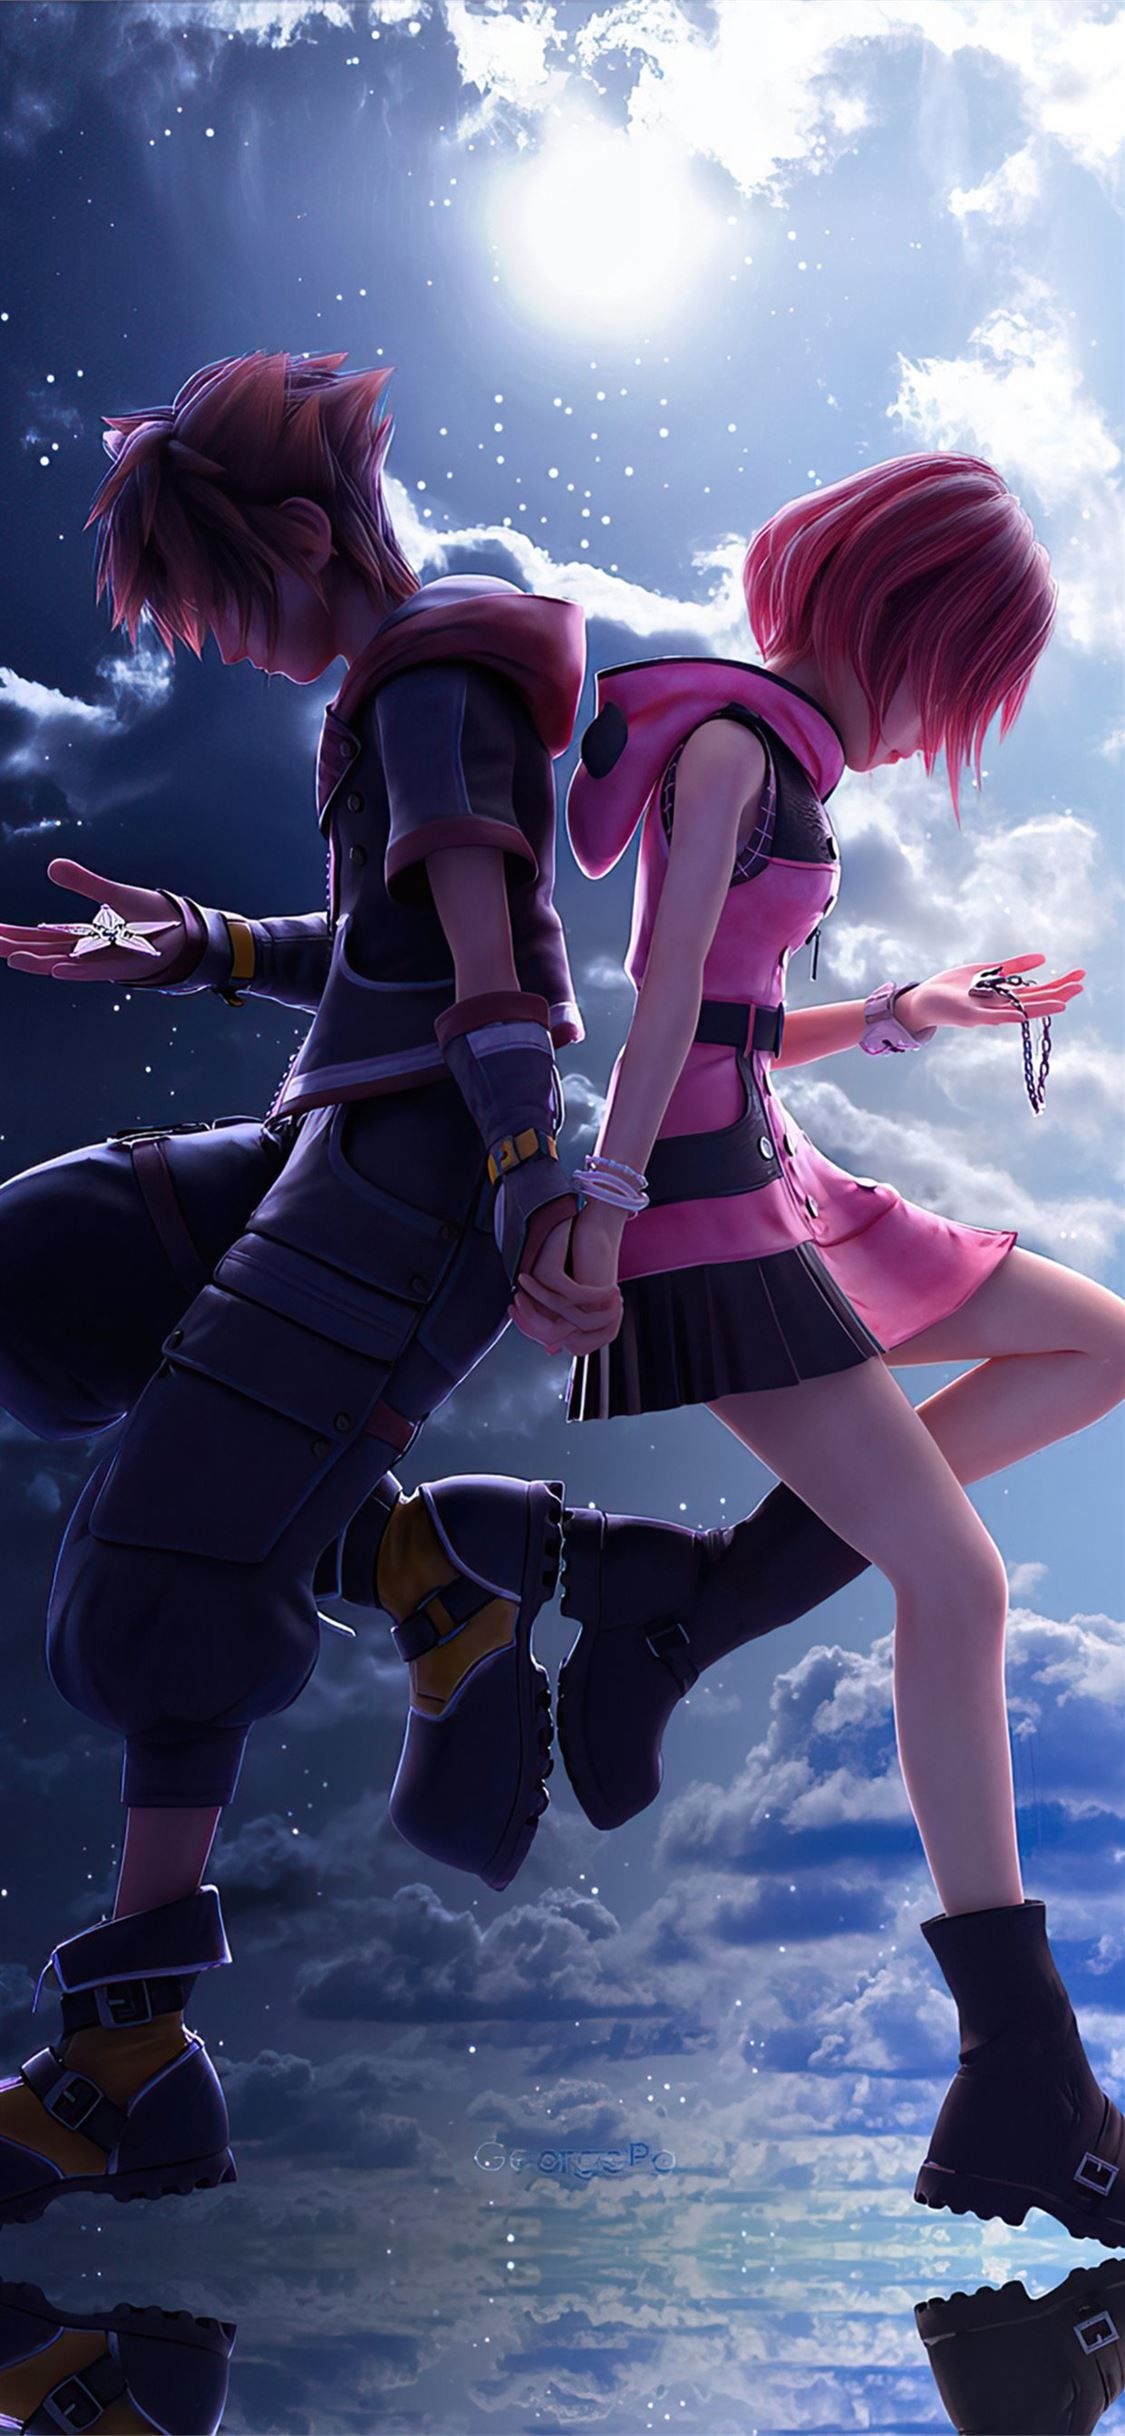 Kairi kingdom hearts anime, Beloved video game character, Friendship bonds, Magical worlds, 1130x2440 HD Handy